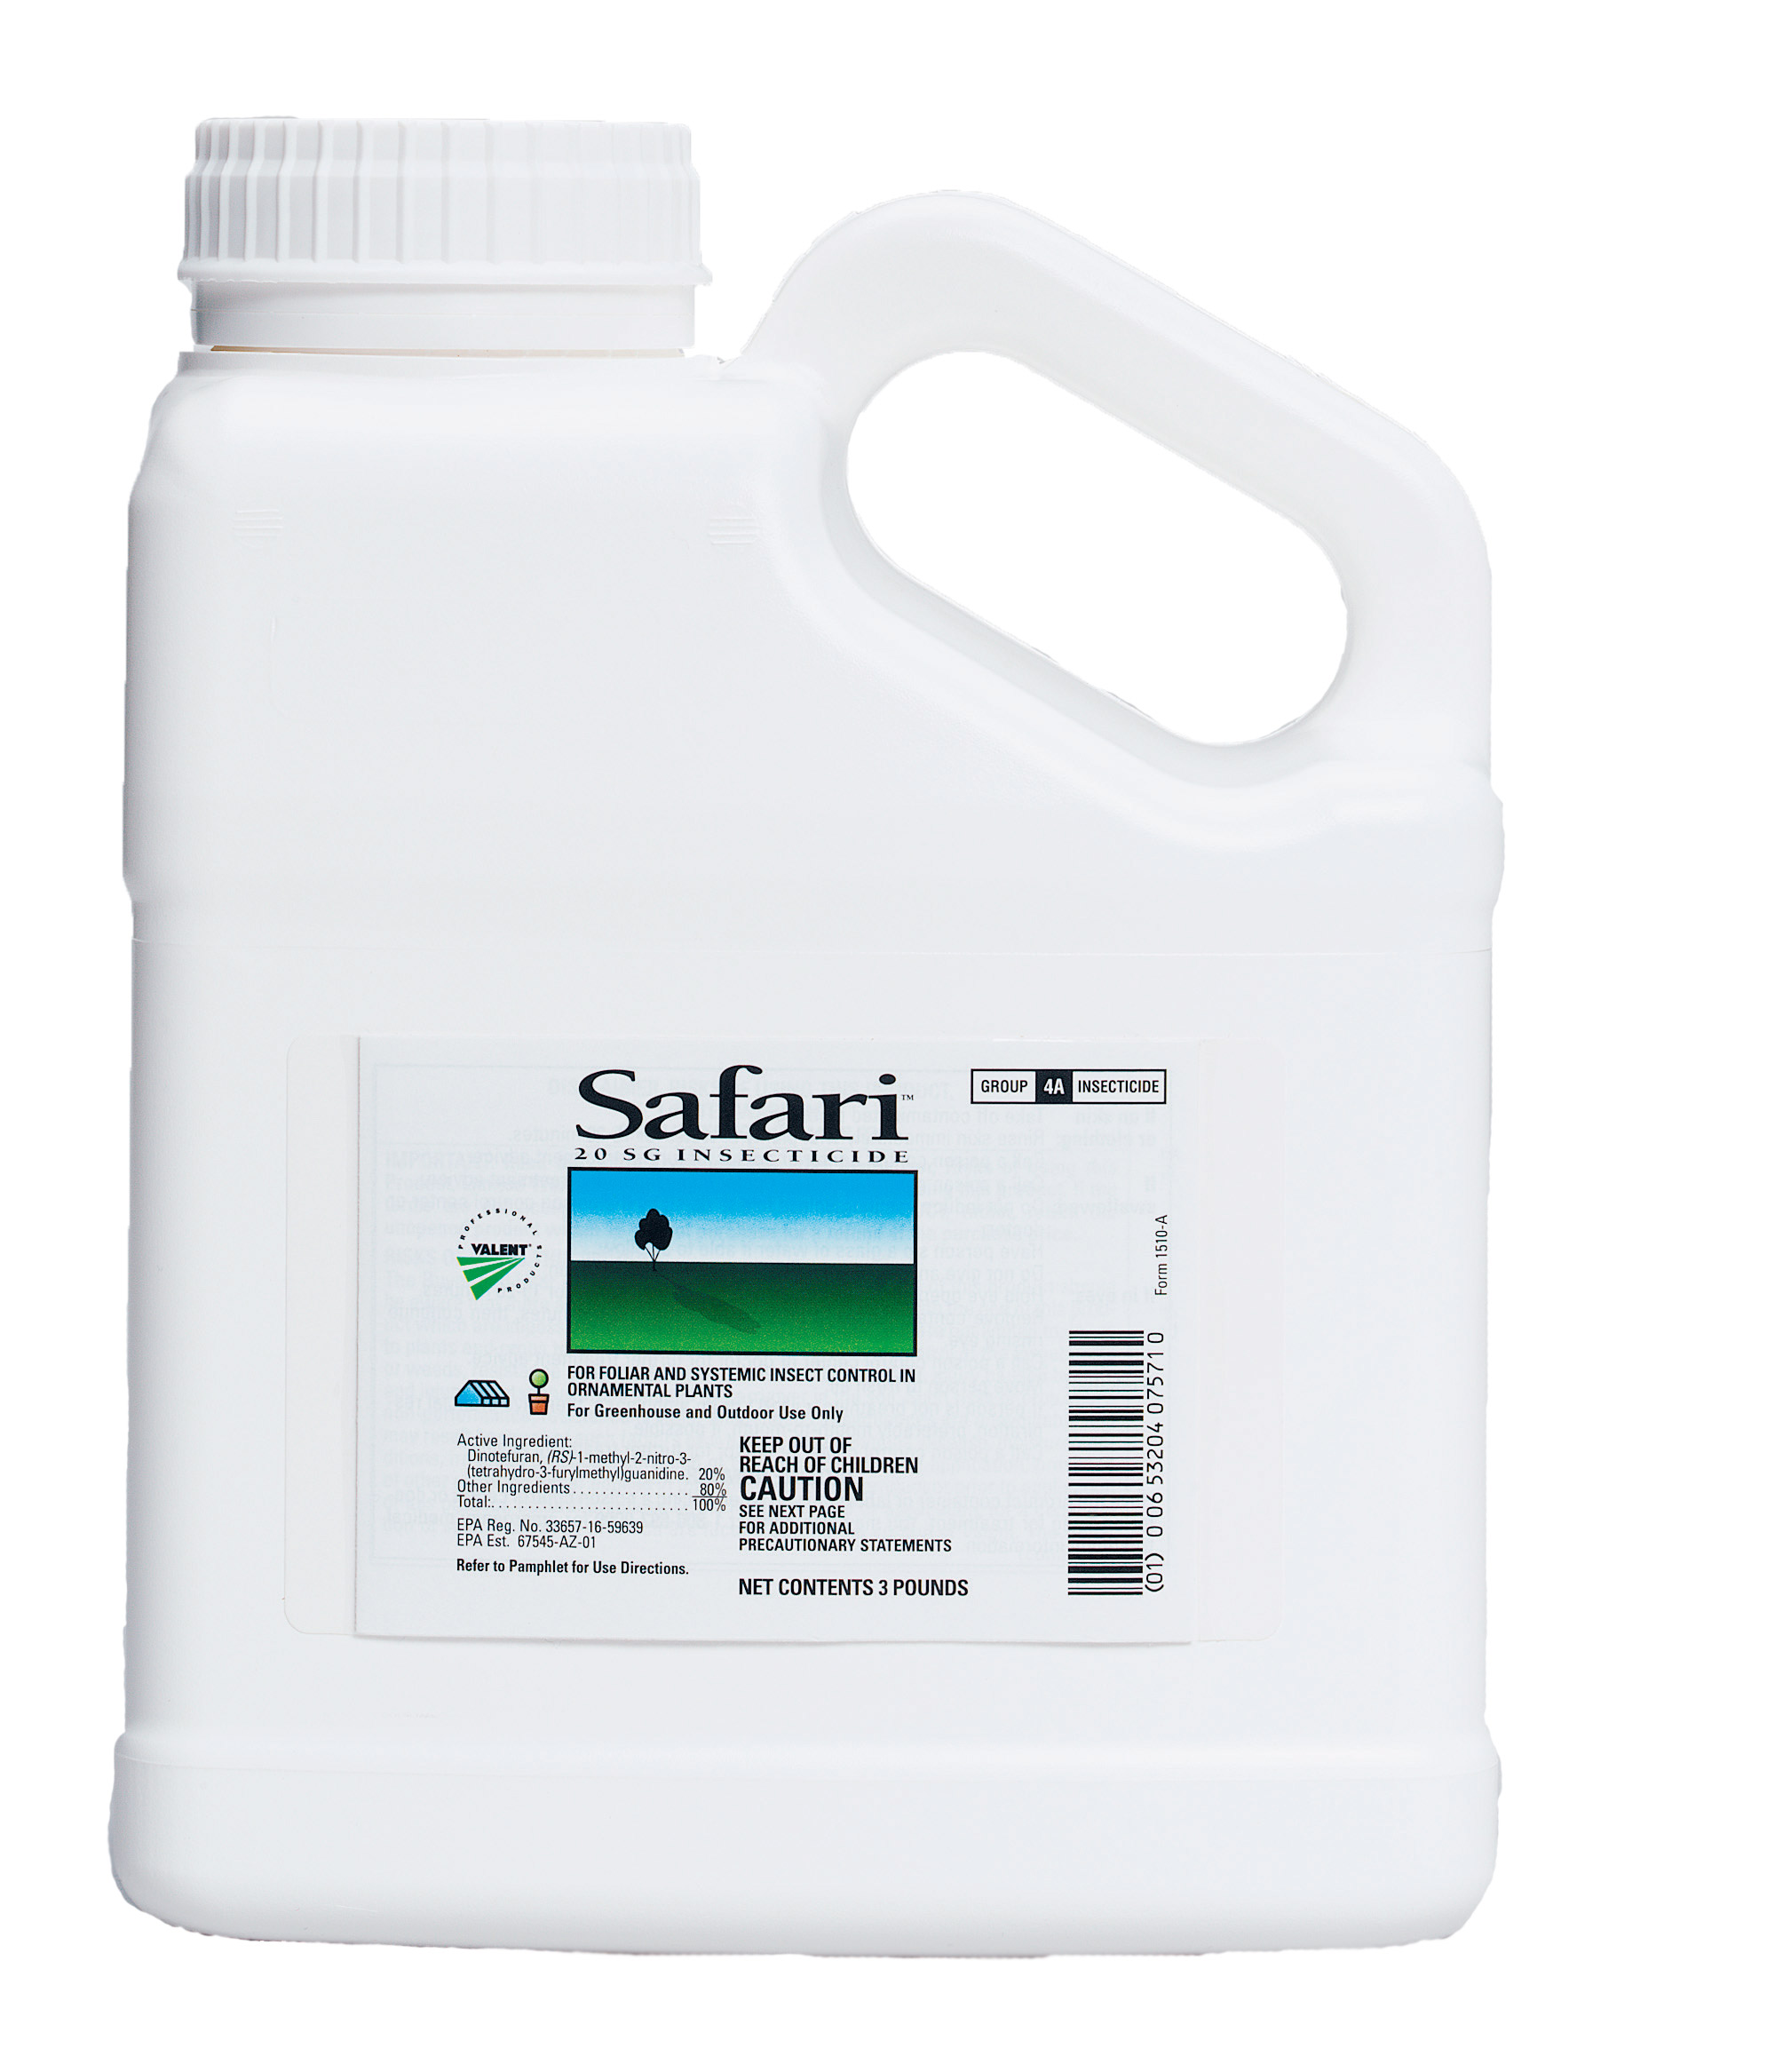 Safari 20 SG 3 lb Bottle - Insecticides